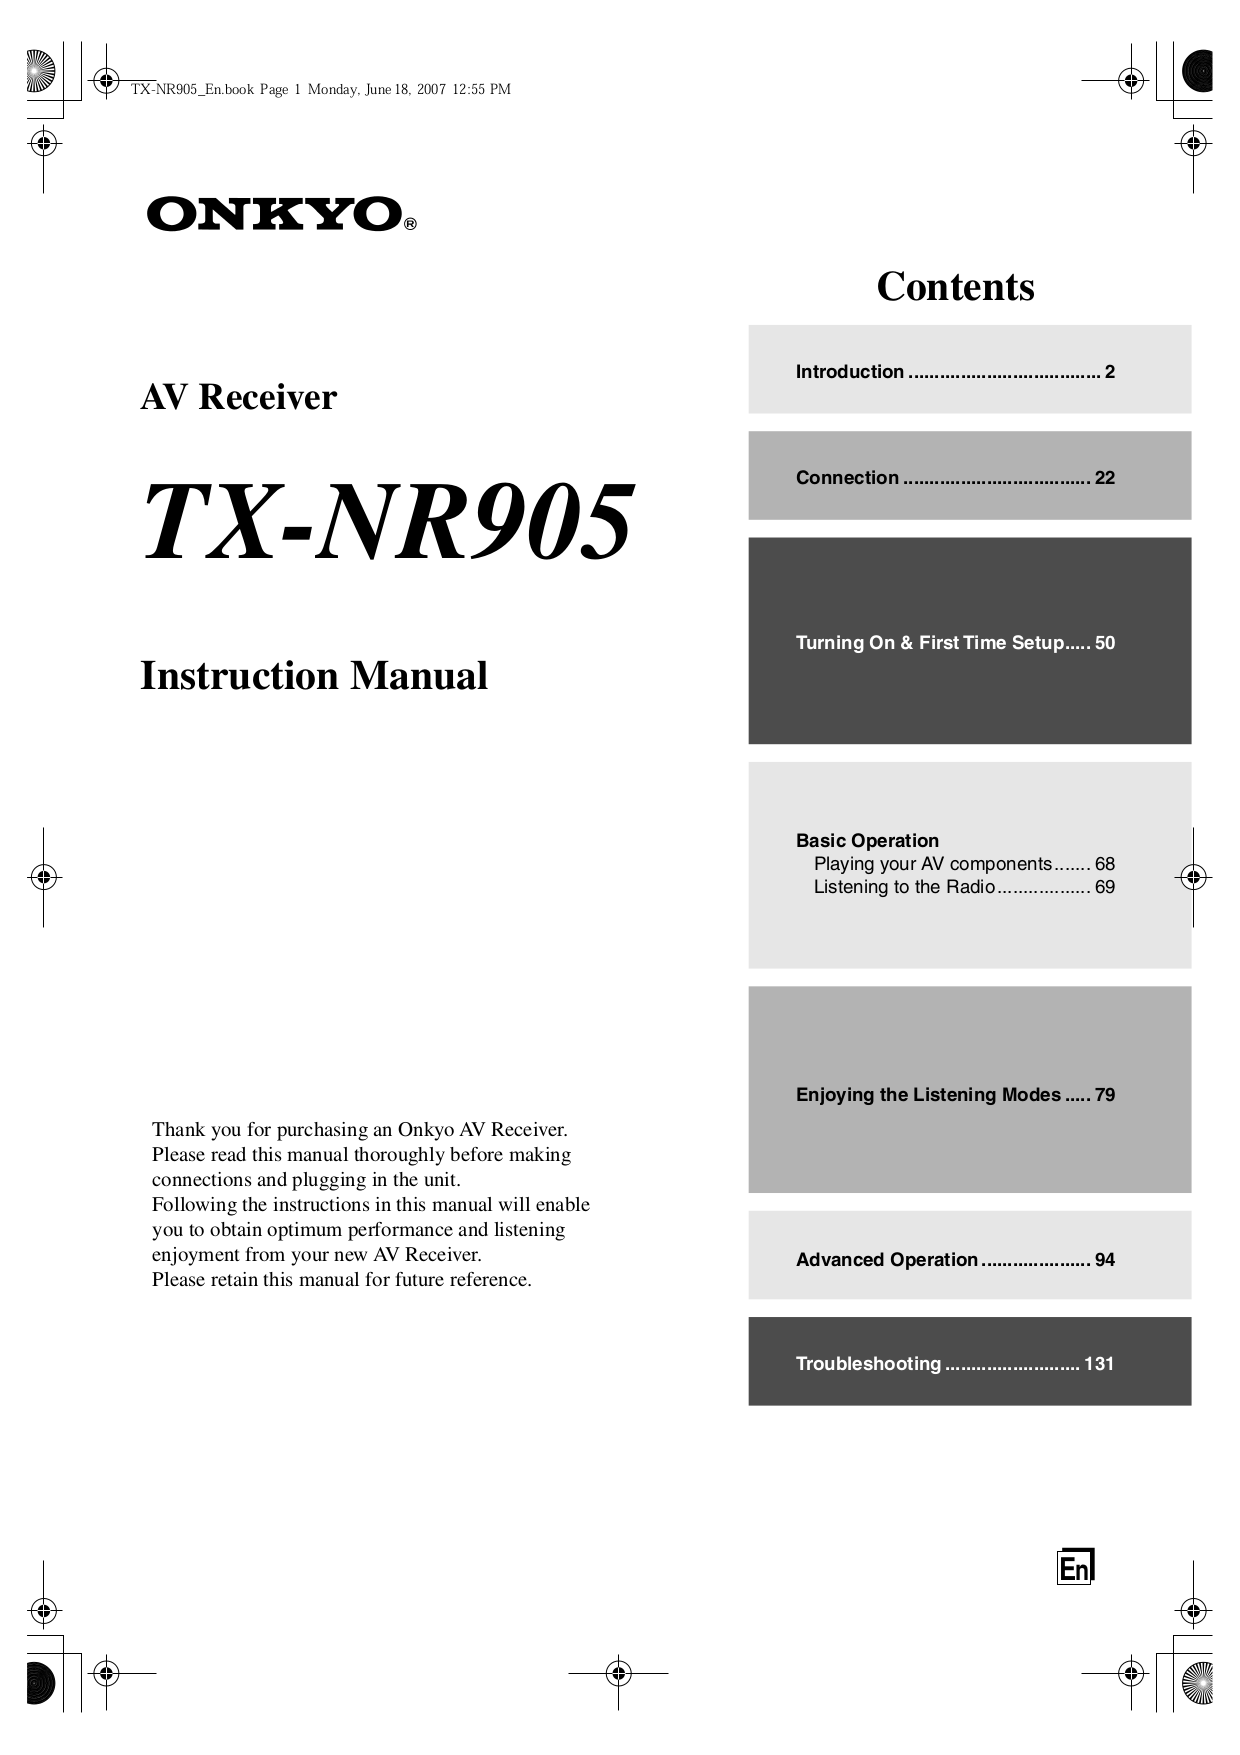 Download free pdf for Onkyo TX-NR905 Receiver manual